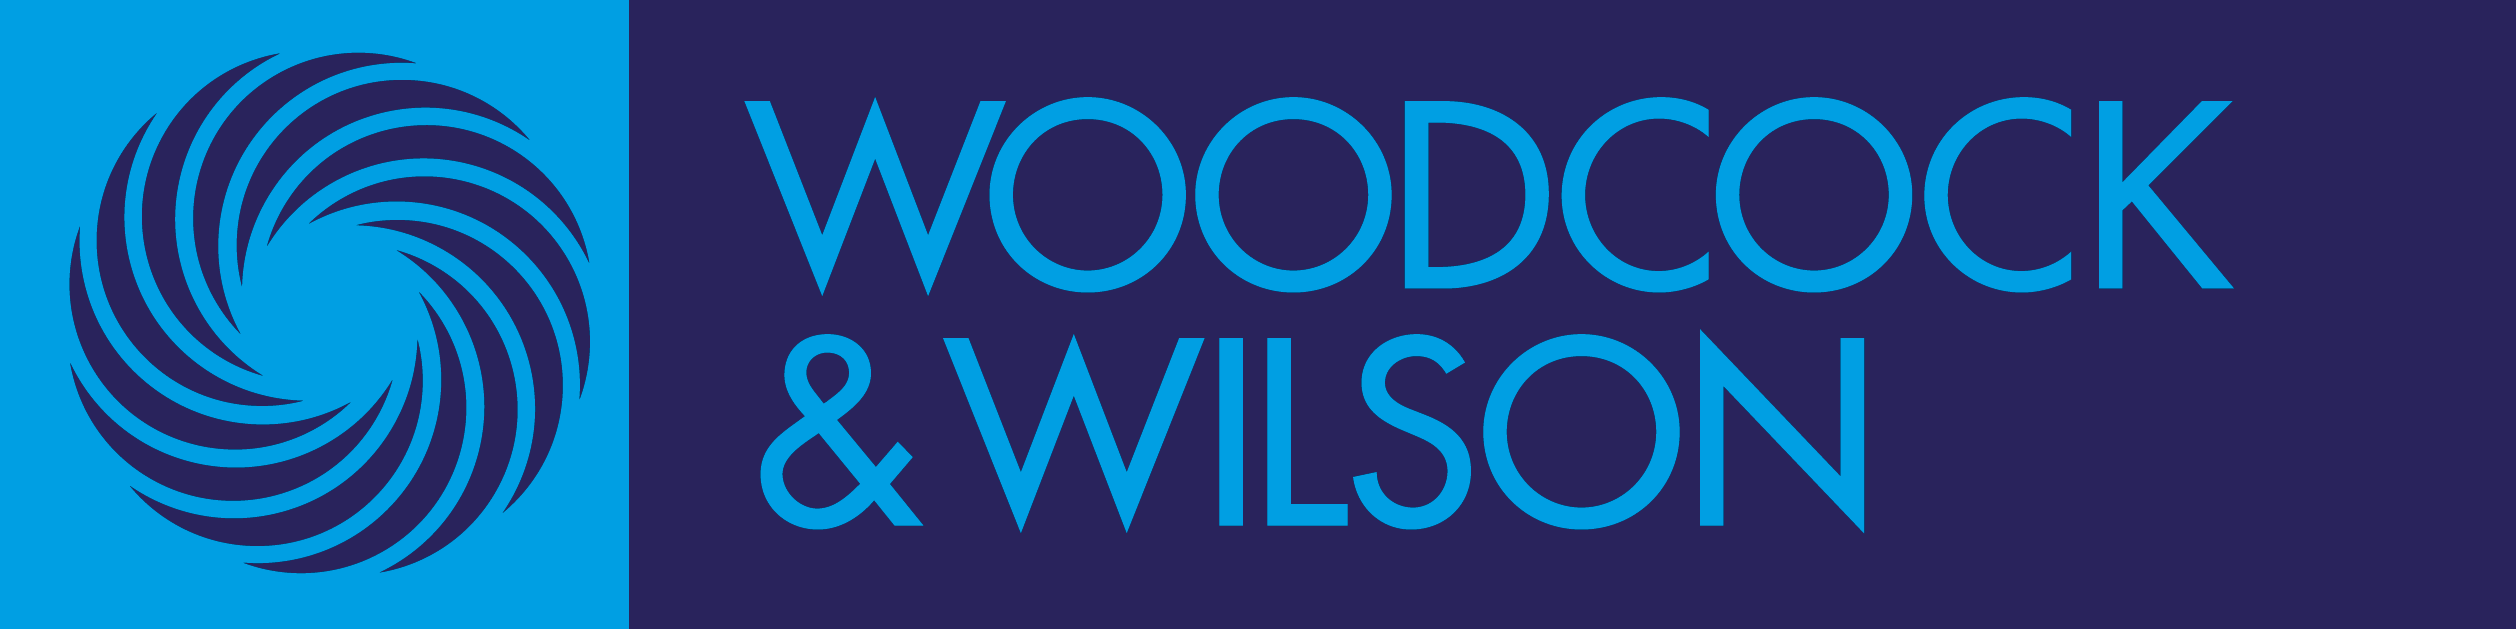 Woodcock & Wilson LTD